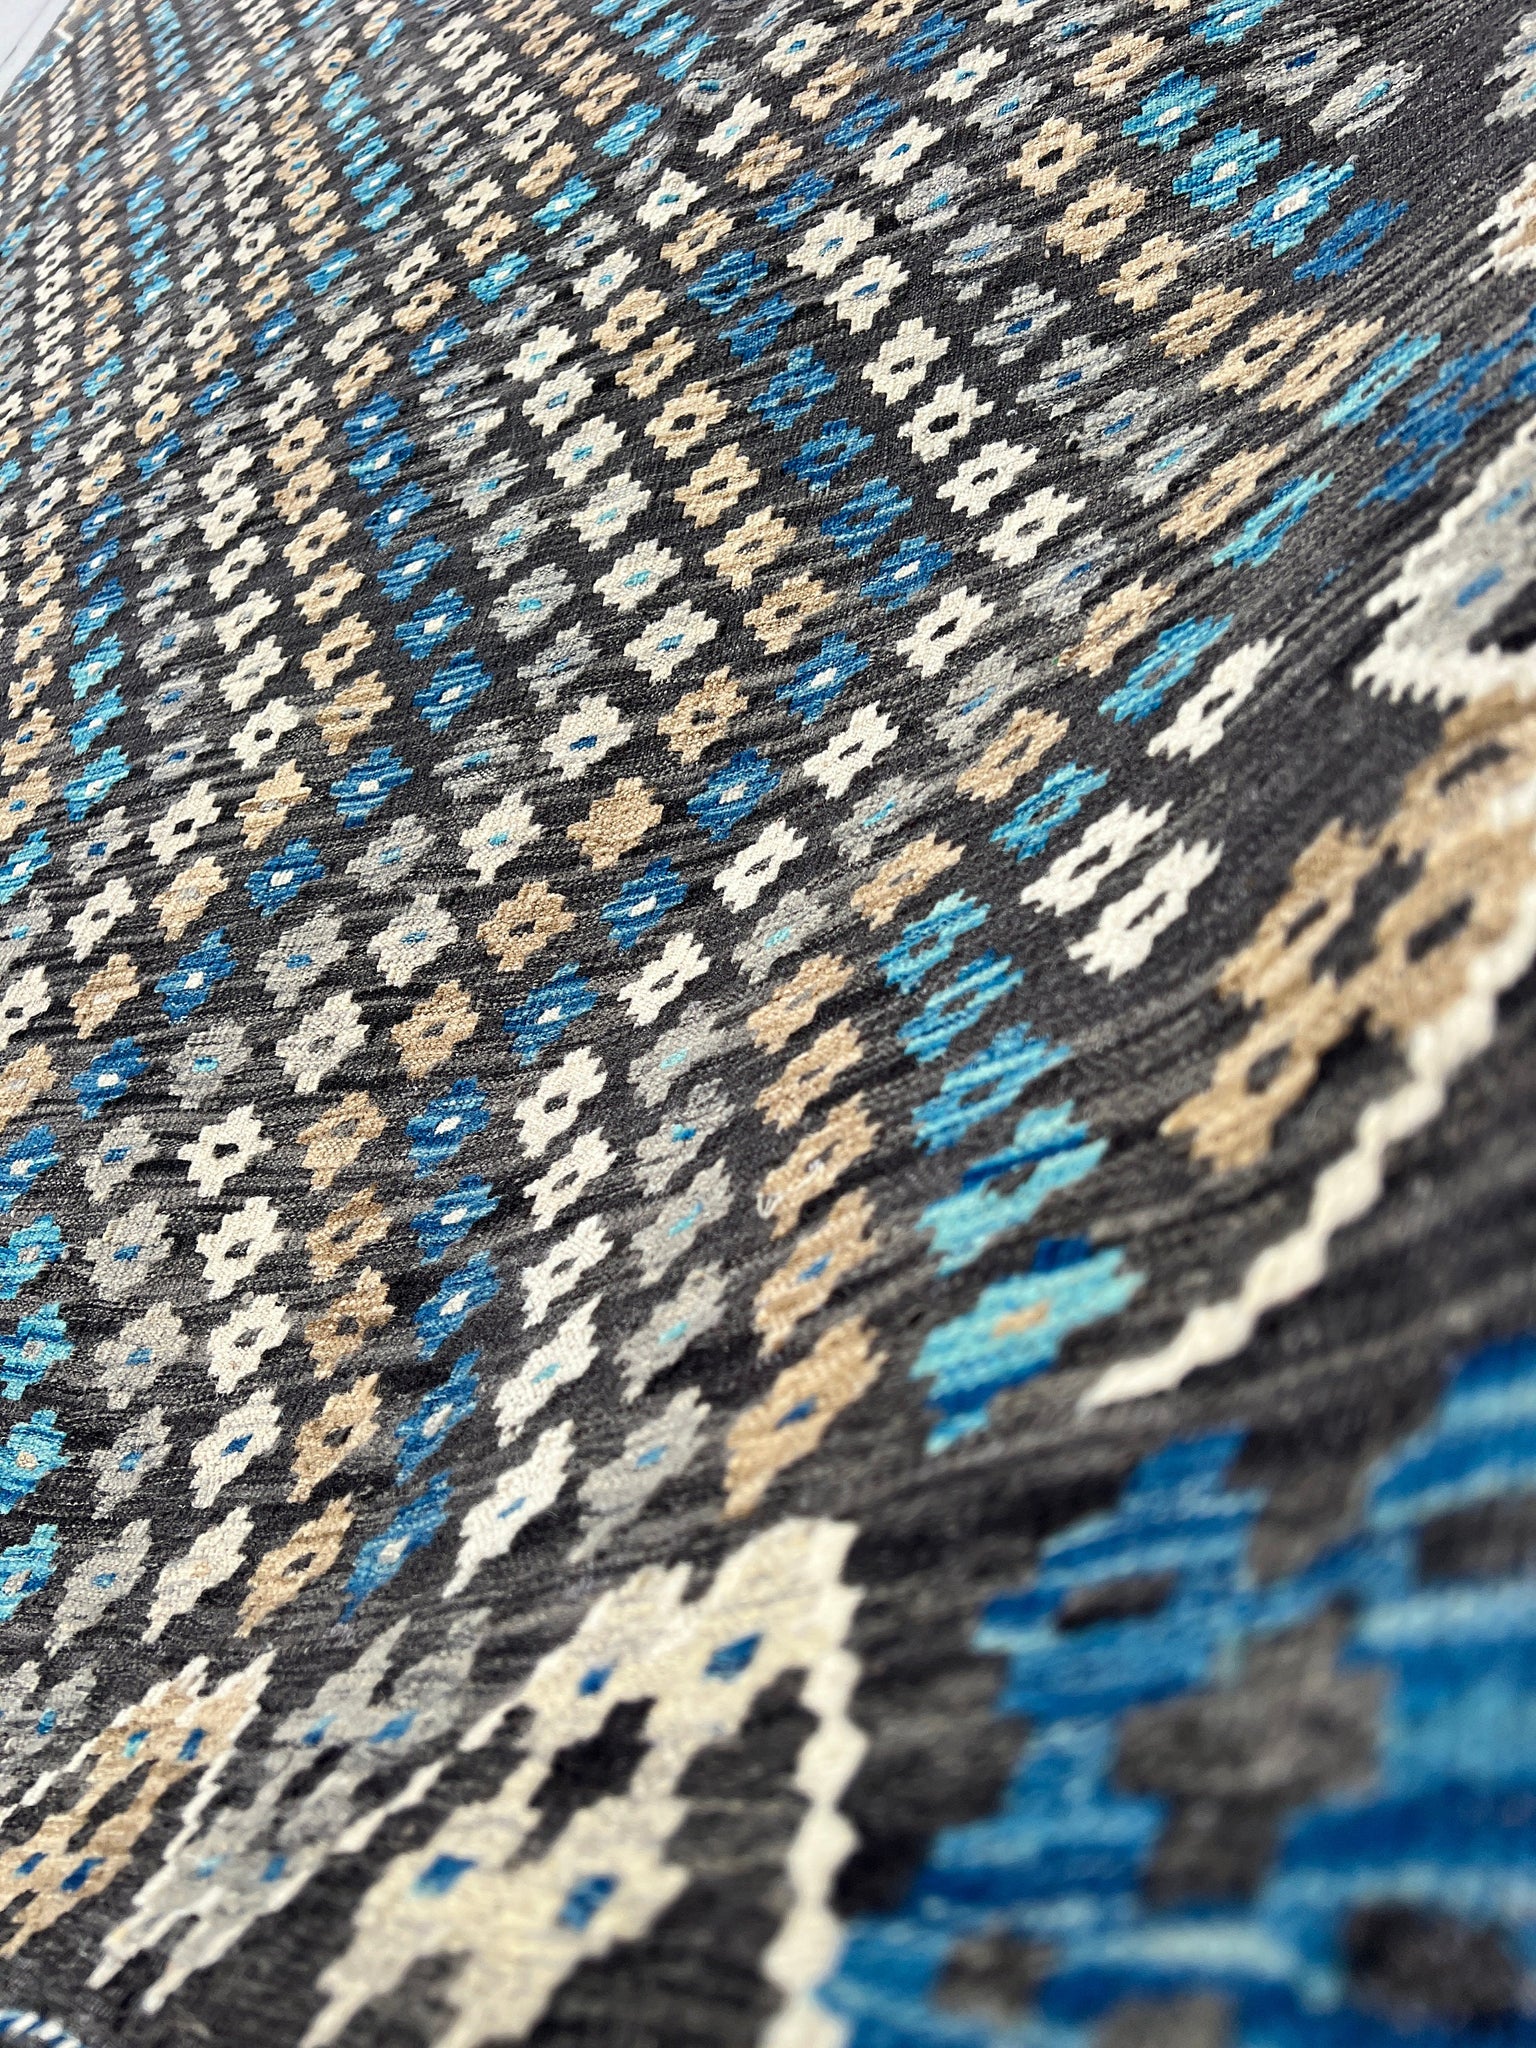 7x10 Handmade Afghan Kilim Rug | Charcoal Black Grey Tan Brown Blue | Flatweave Flat Woven Wool Persian Turkish Oushak Outdoor Patio